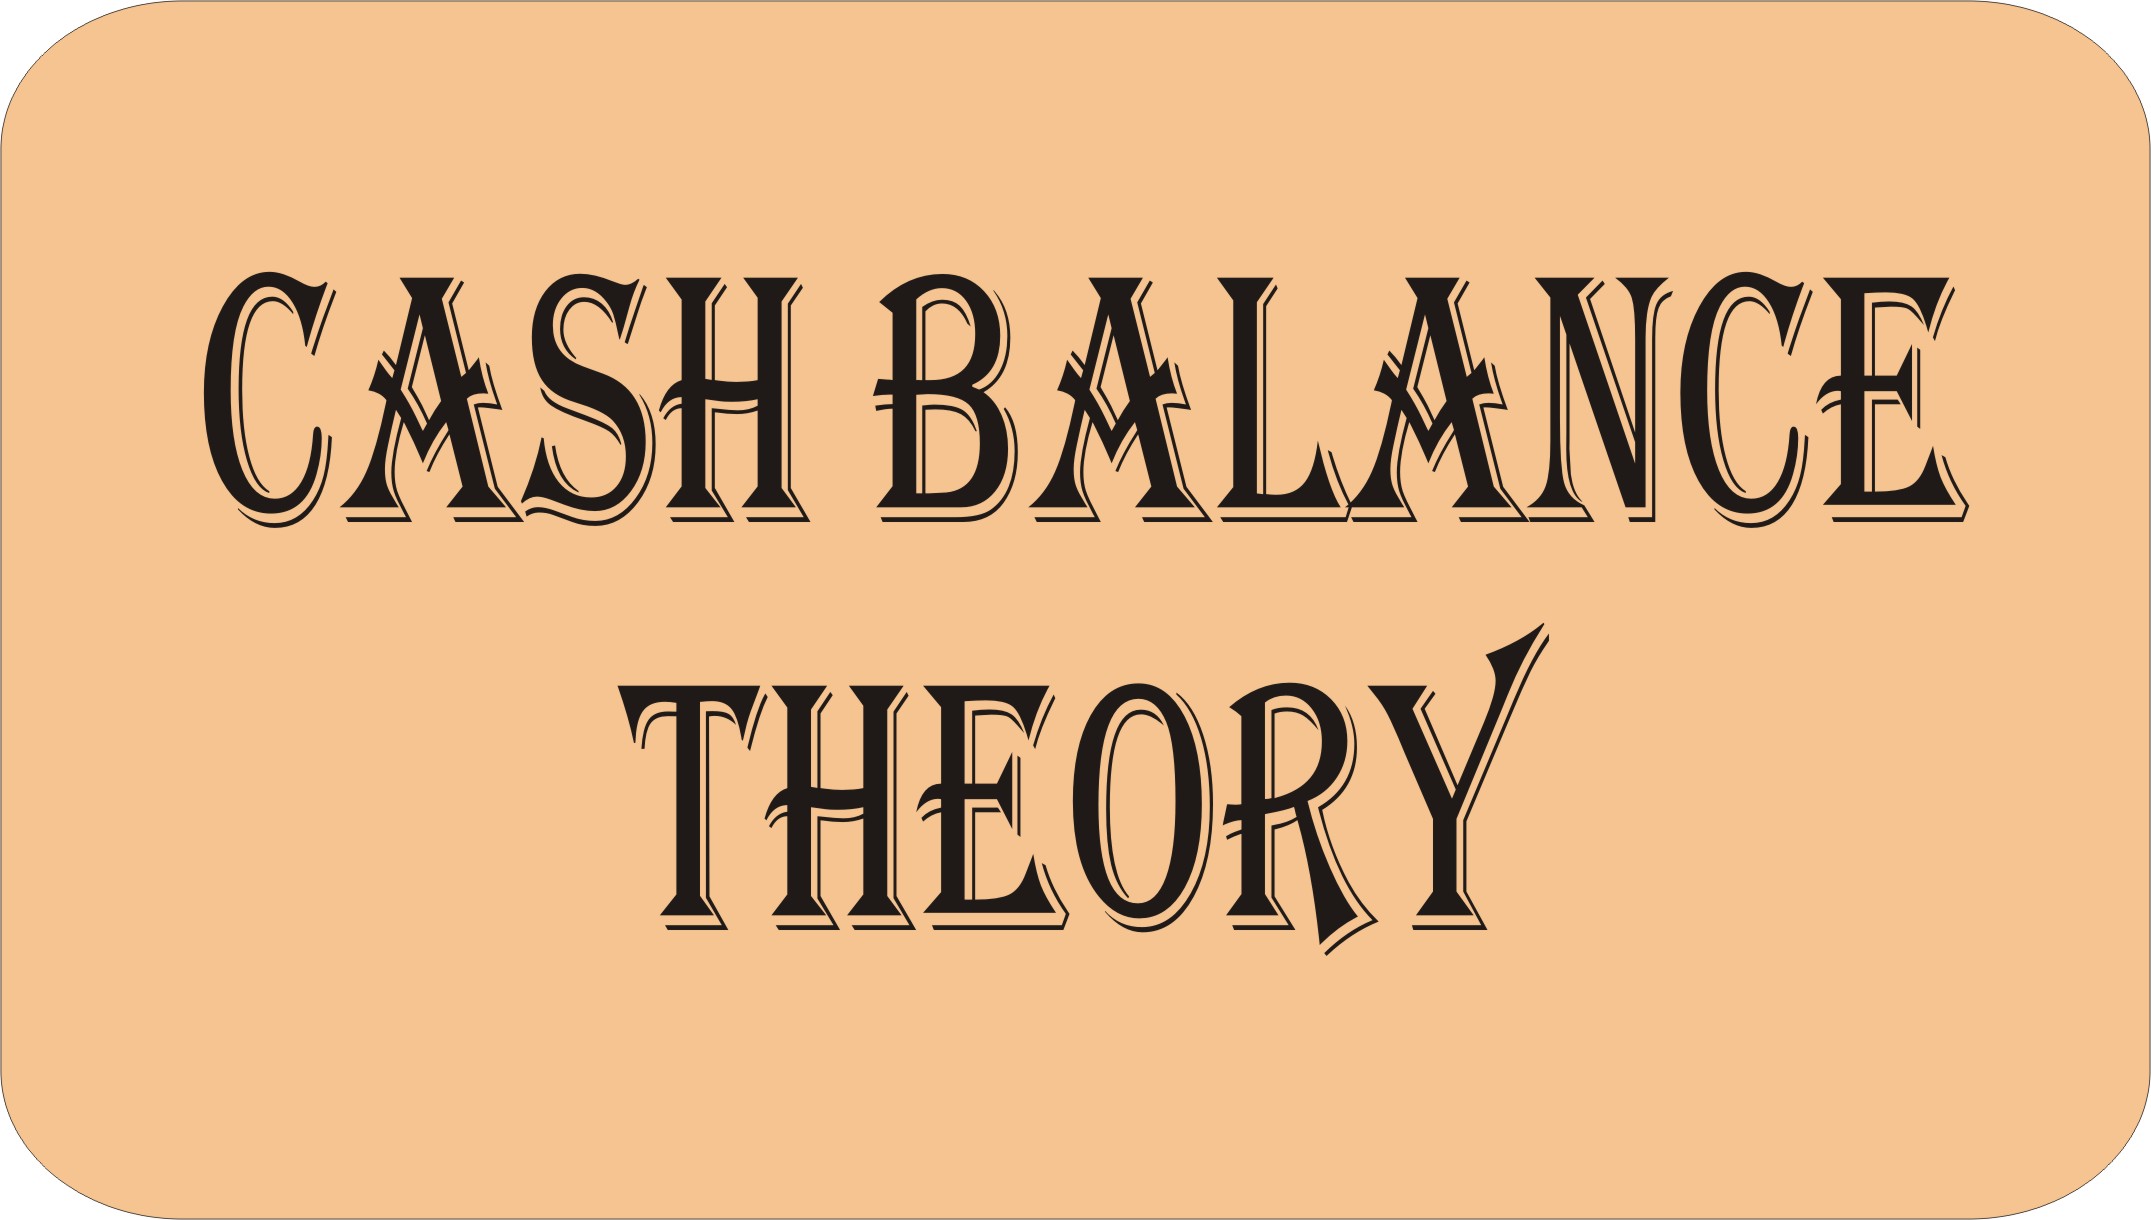 Cash Balance Theory